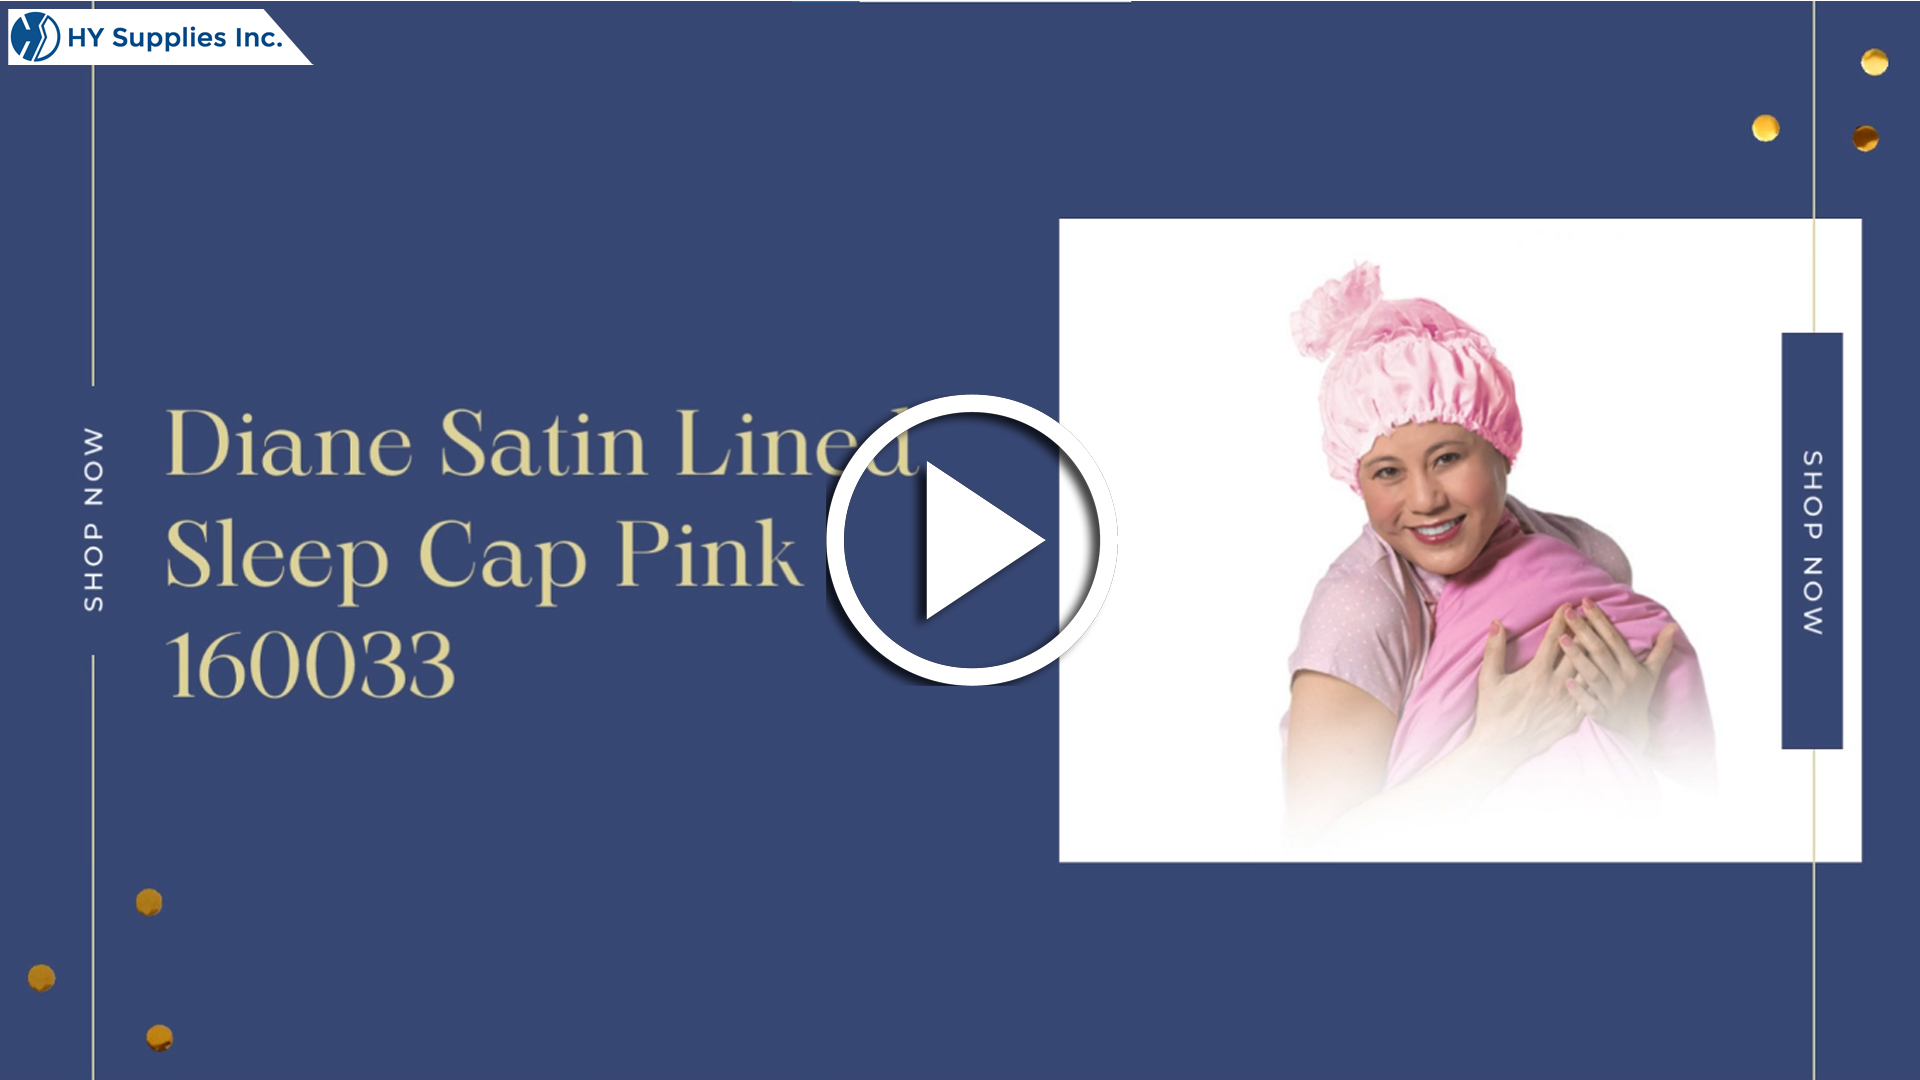 Diane Satin Lined Sleep Cap Pink 160033 